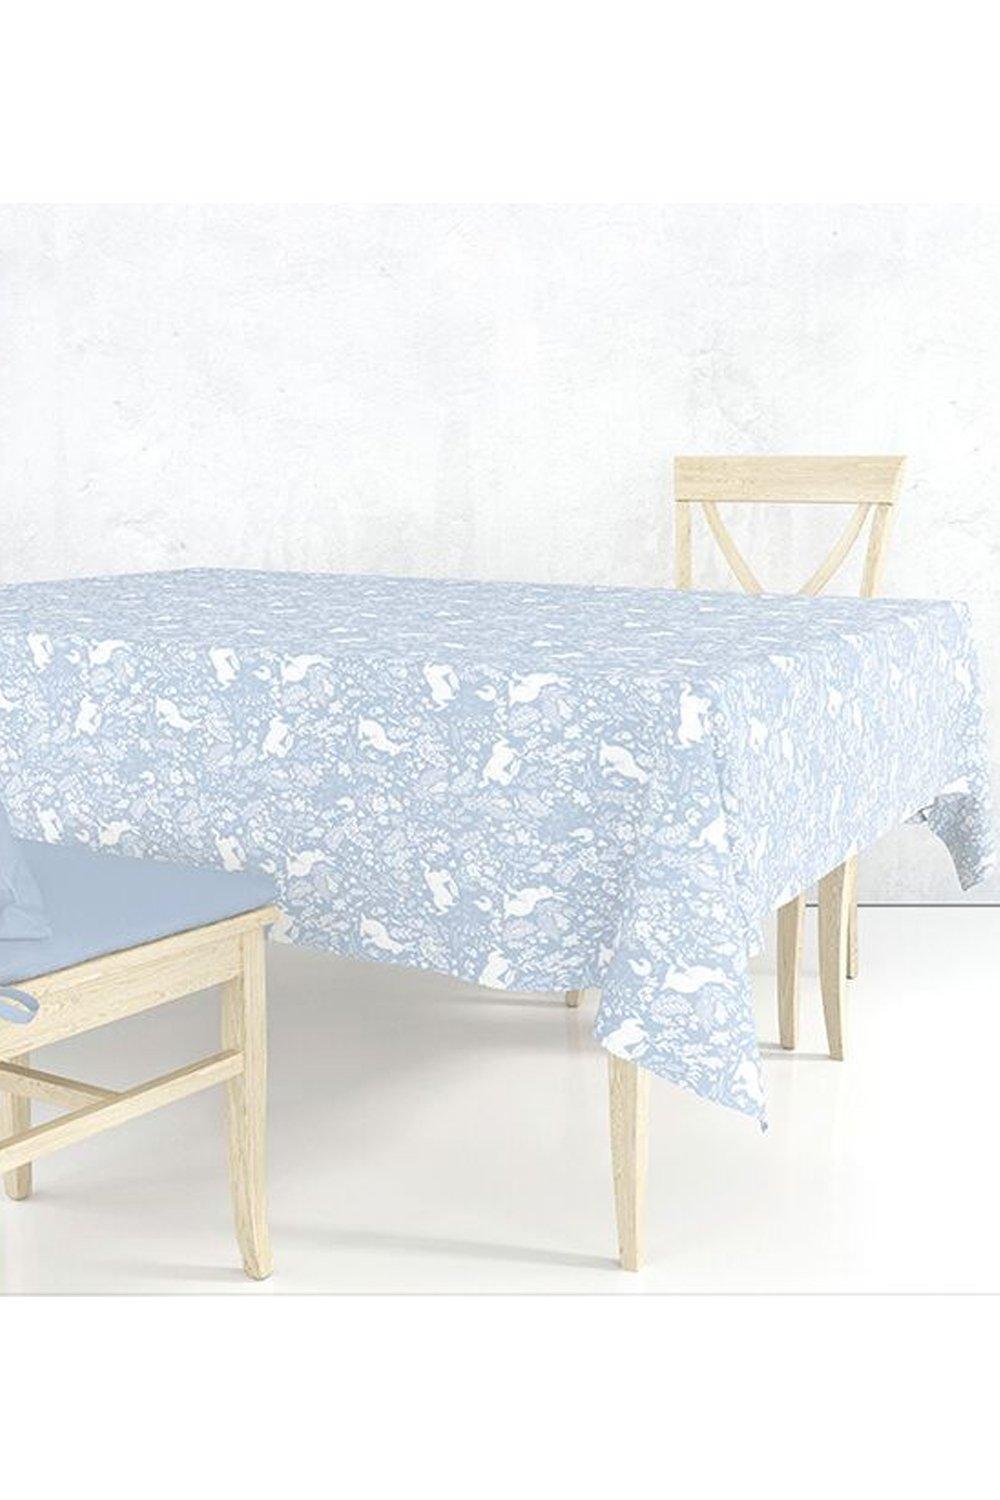 William Morris Forest Life Blue 132X178cm Acrylic Tablecloth